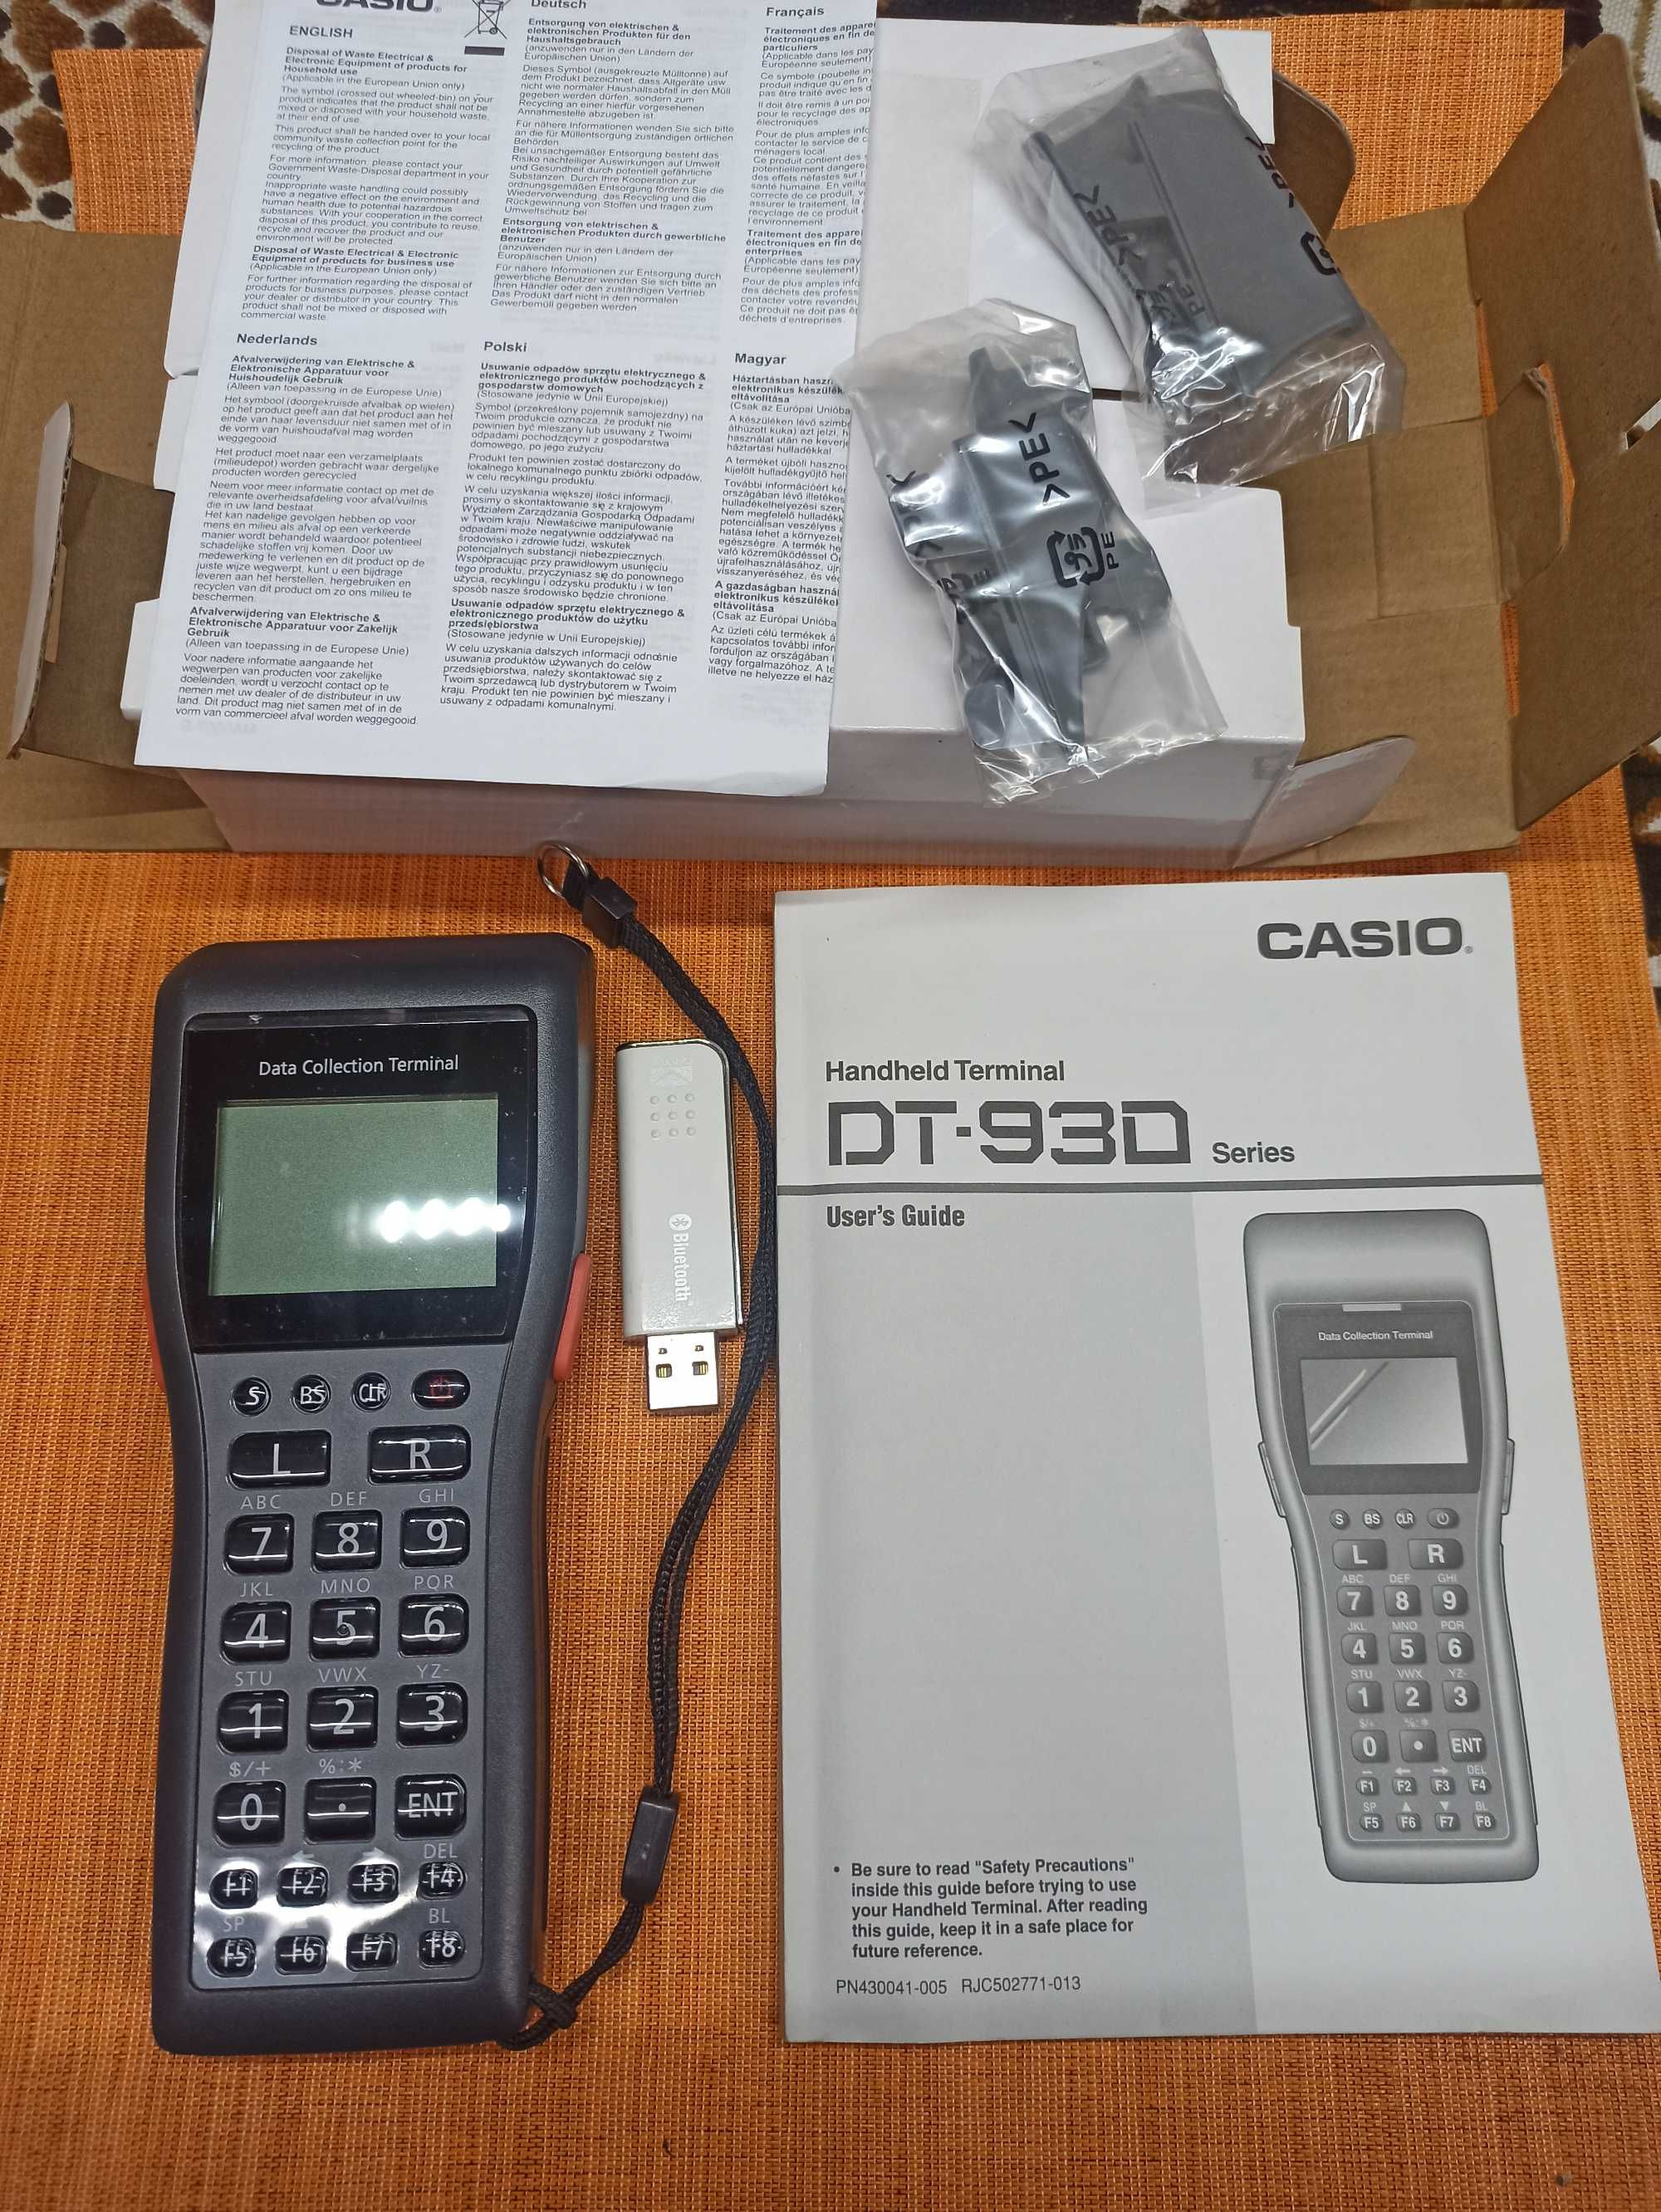 Термінал збору даних Casio DT-930M51E Bluetooth